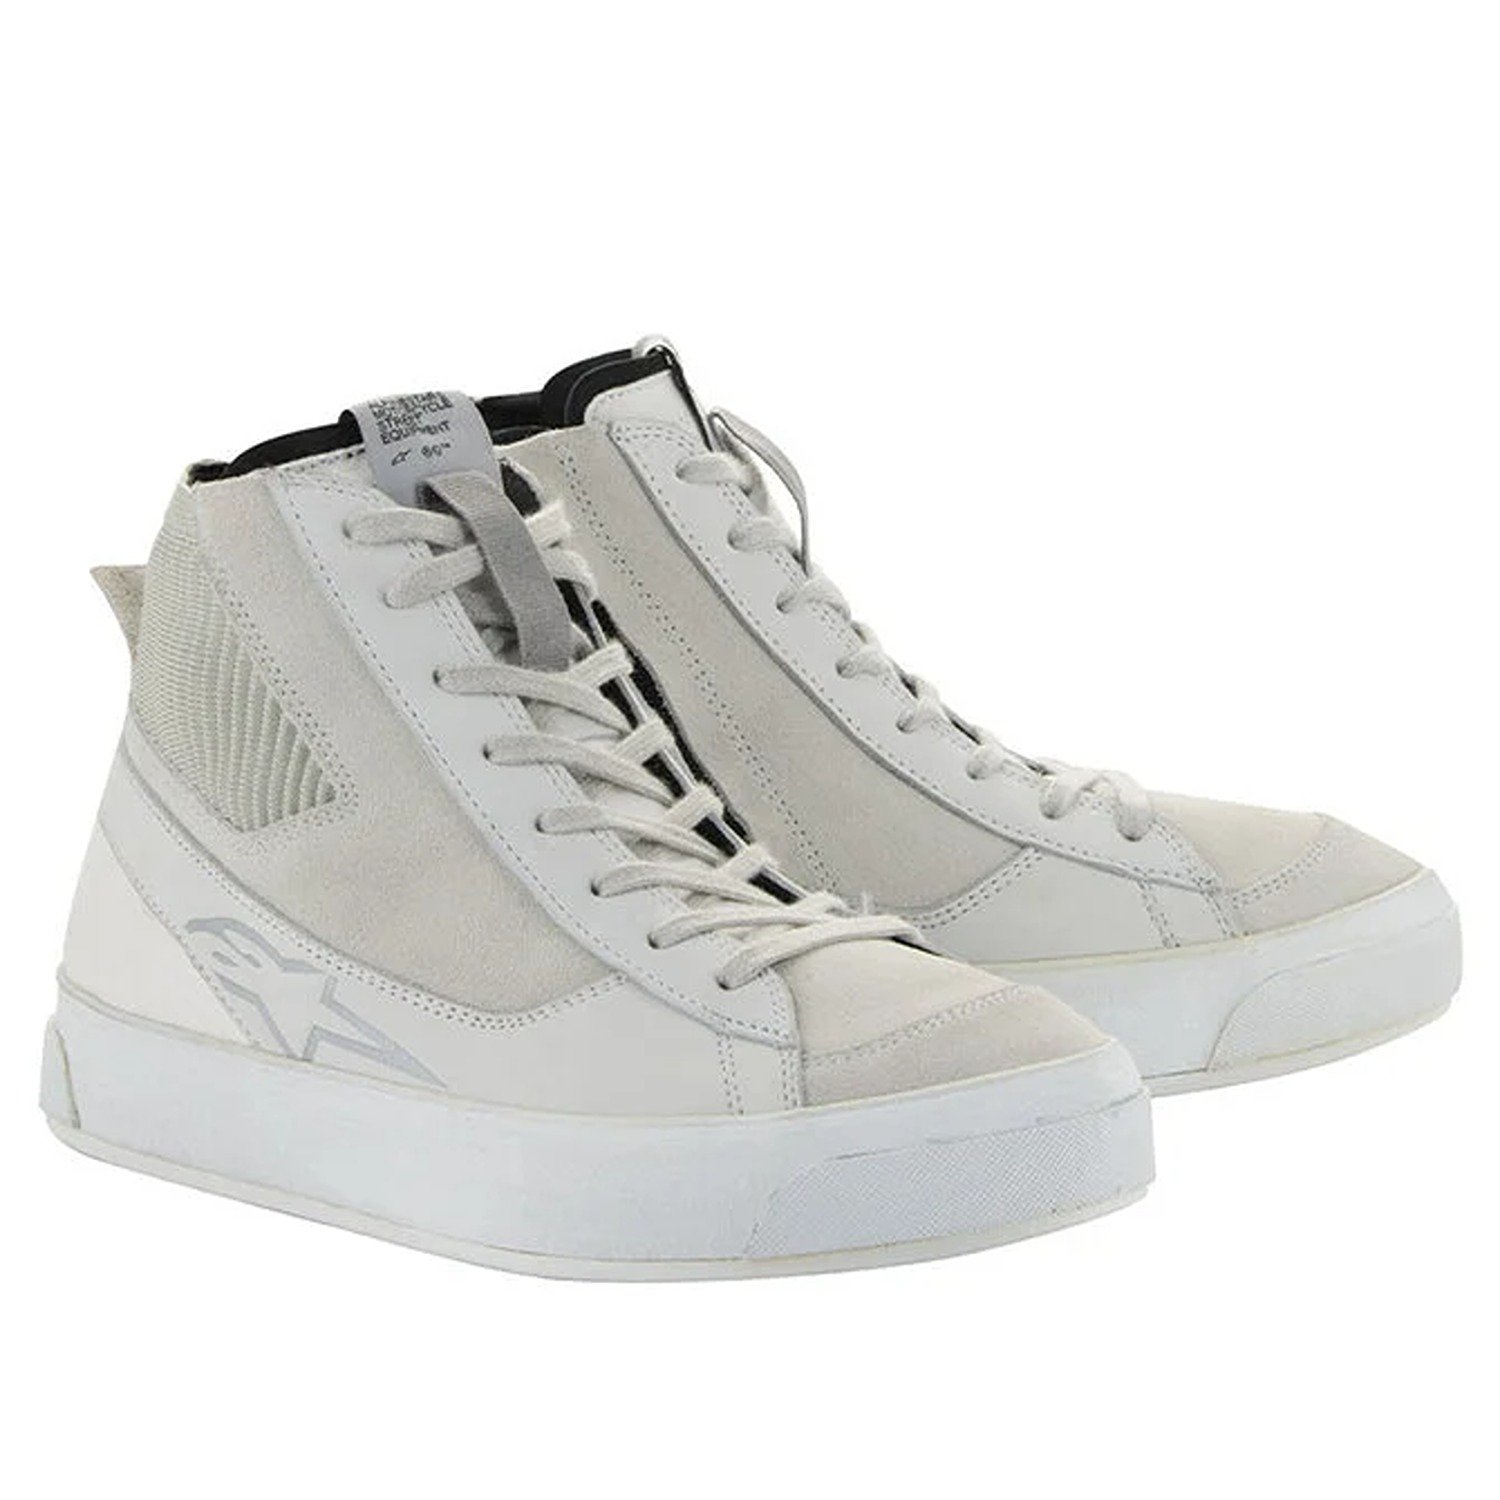 Image of Alpinestars Stella Stated Podium Shoes White Cool Gray Size US 115 EN